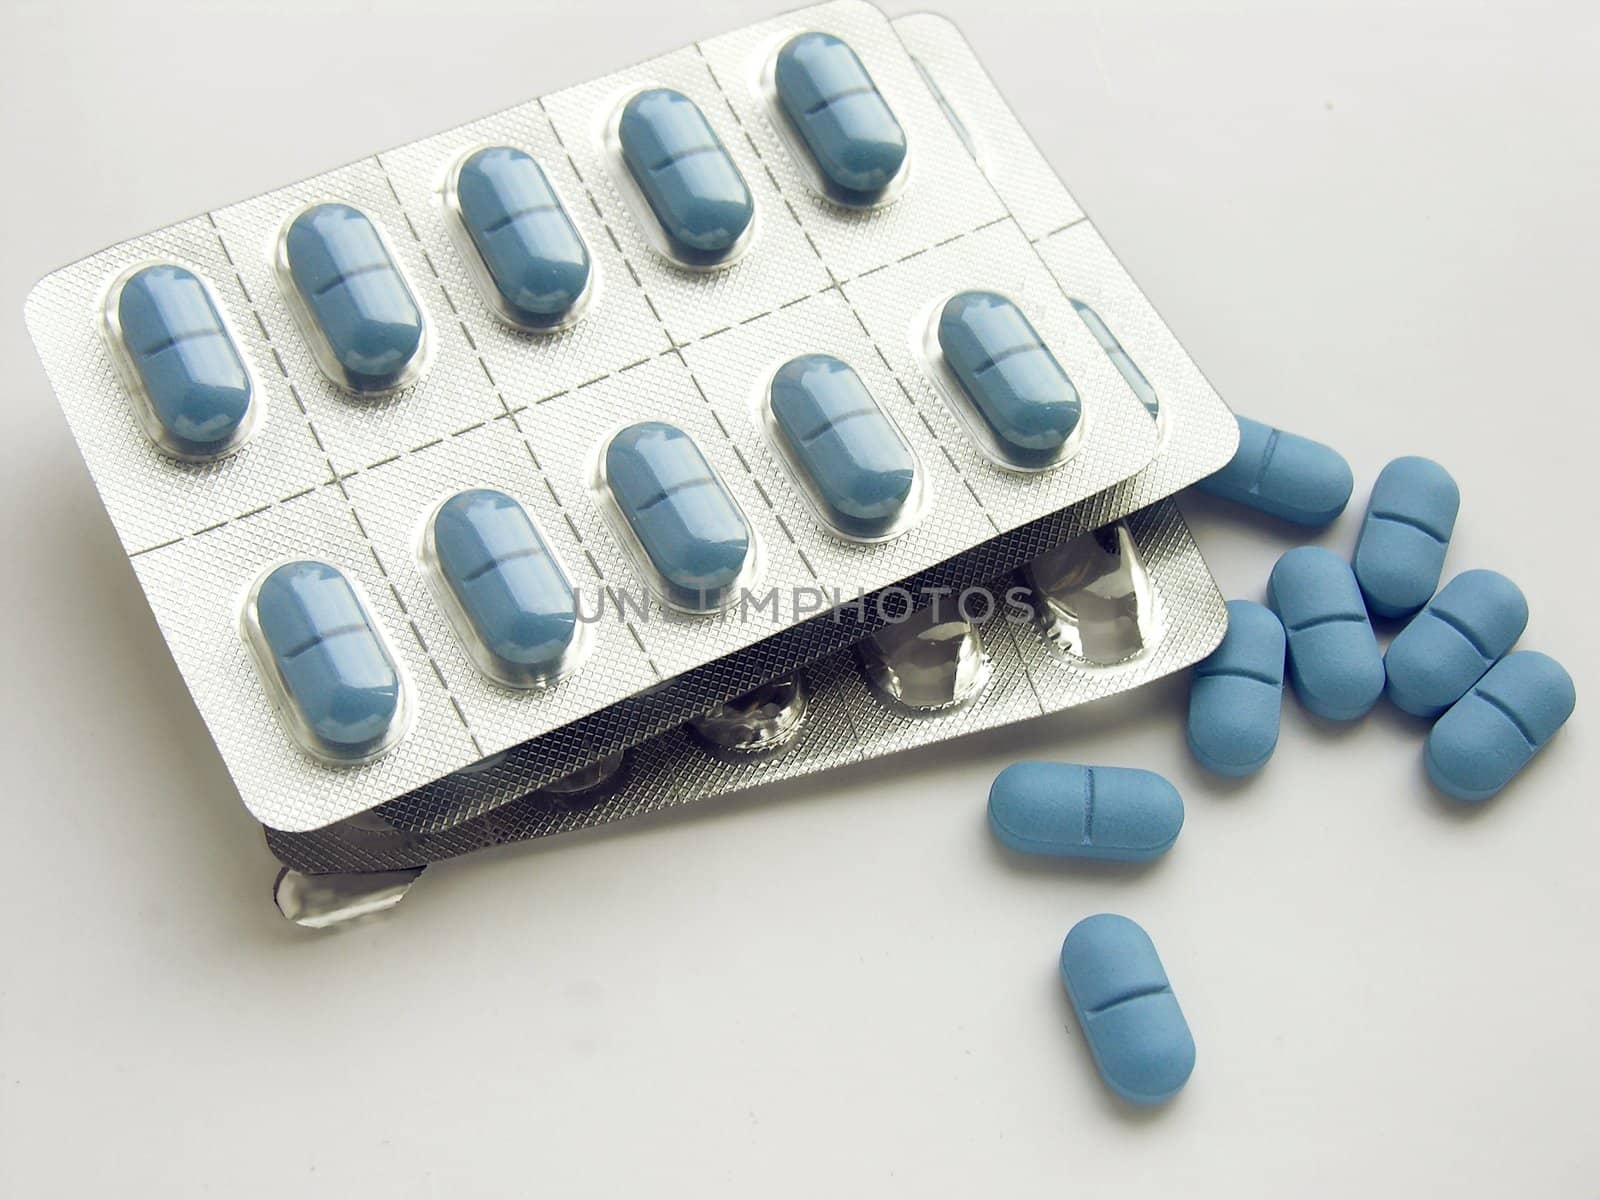 blue medicines by RAIMA